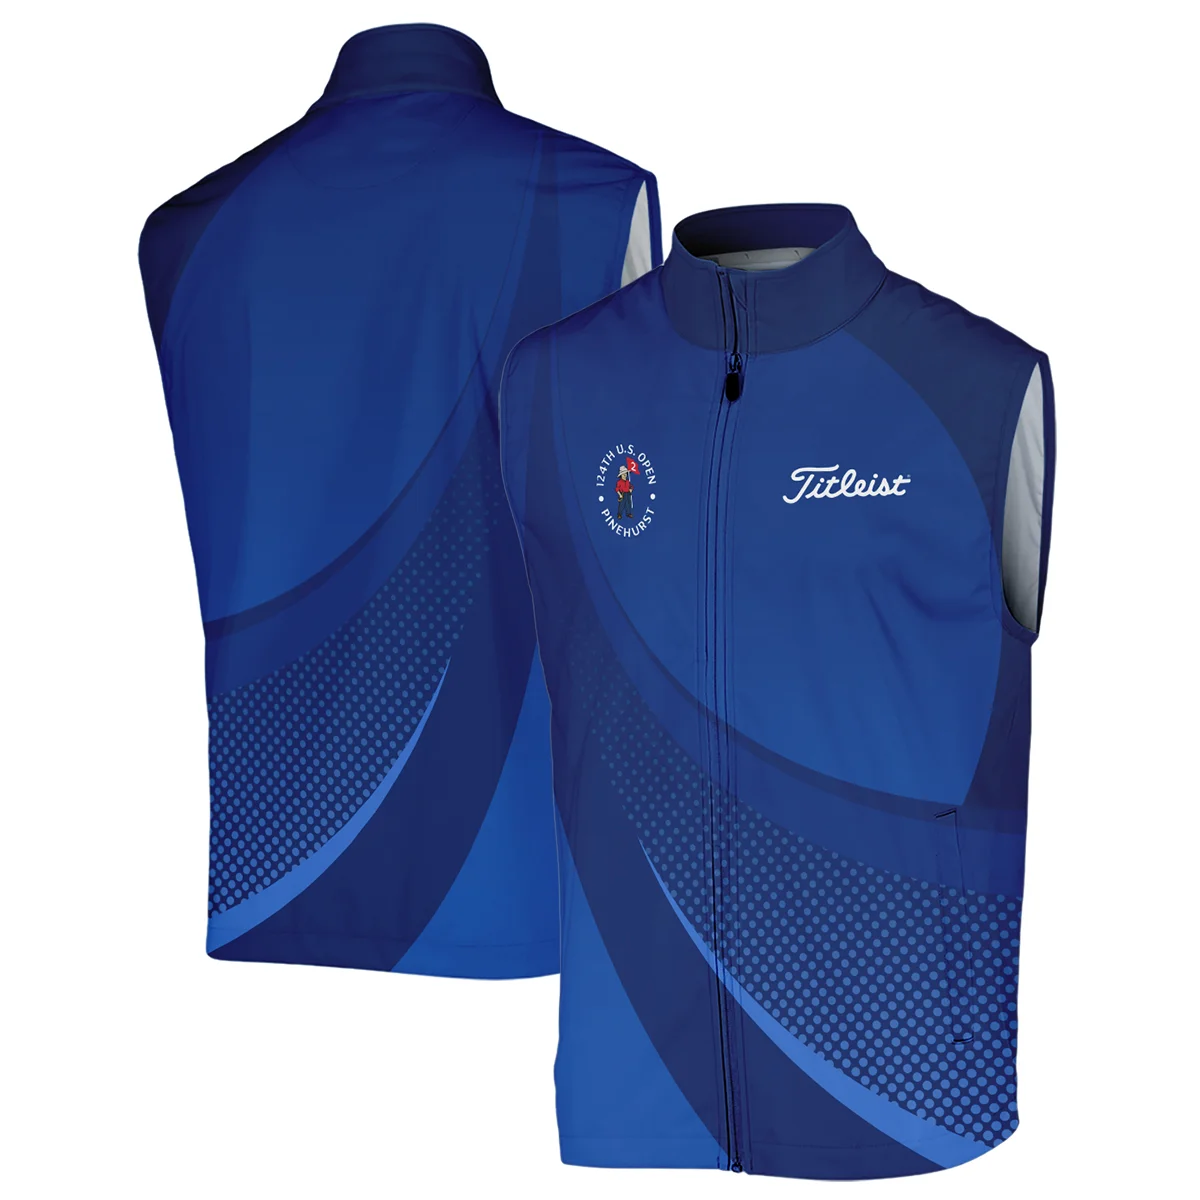 Titleist 124th U.S. Open Pinehurst Golf Sport Unisex Sweatshirt Dark Blue Gradient Halftone Pattern All Over Print Sweatshirt